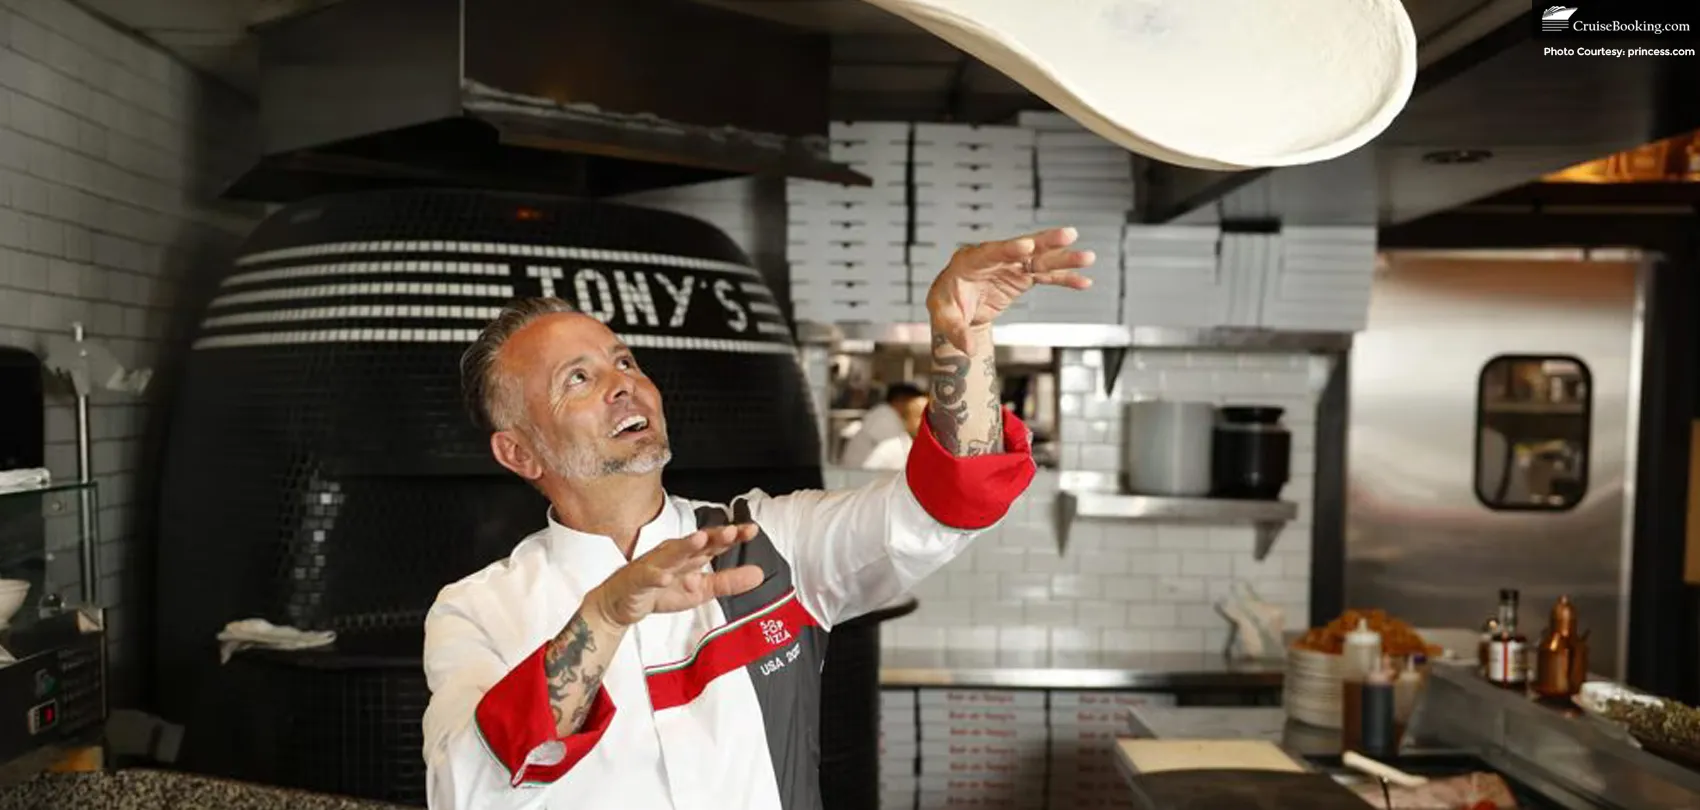 Princess Cruises Strikes Partnership Deal with Chef Tony Gemignani